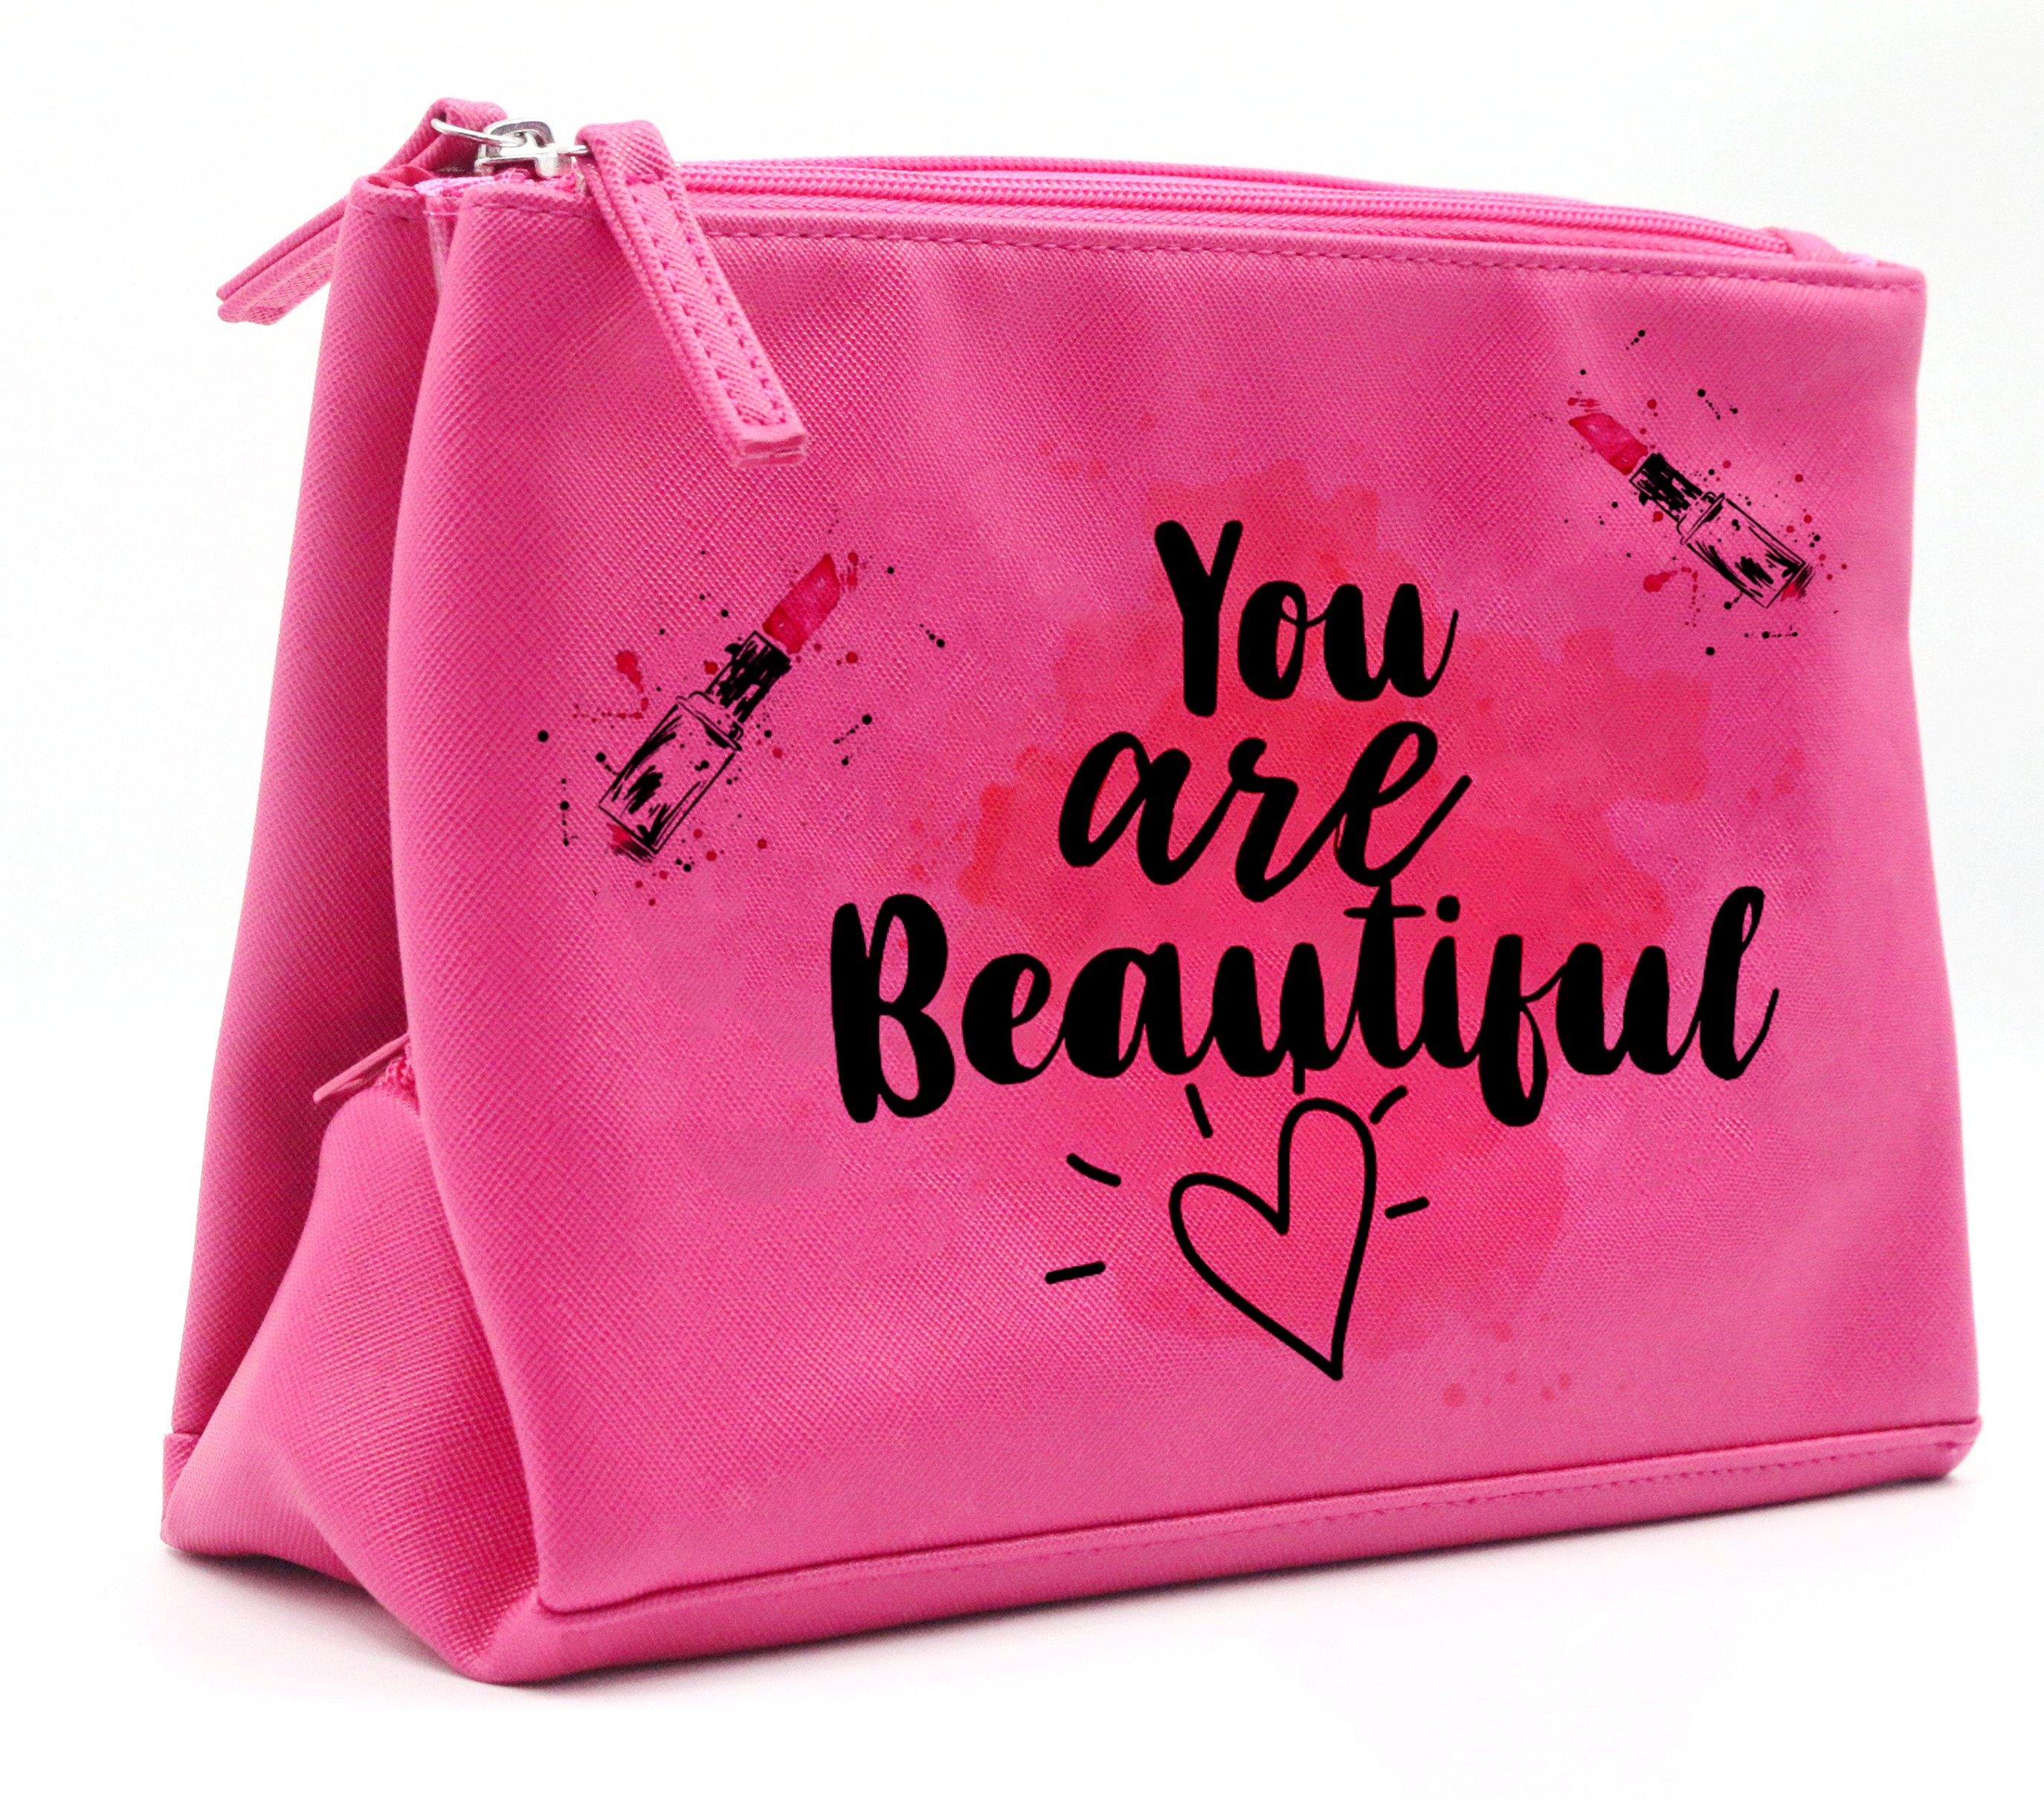 New Trendy Large Foldable Beauty Storage Pink Makeup Hand Bag Travel Vegan Leather Women Waterproof PU Toiletry Cosmetic Bag